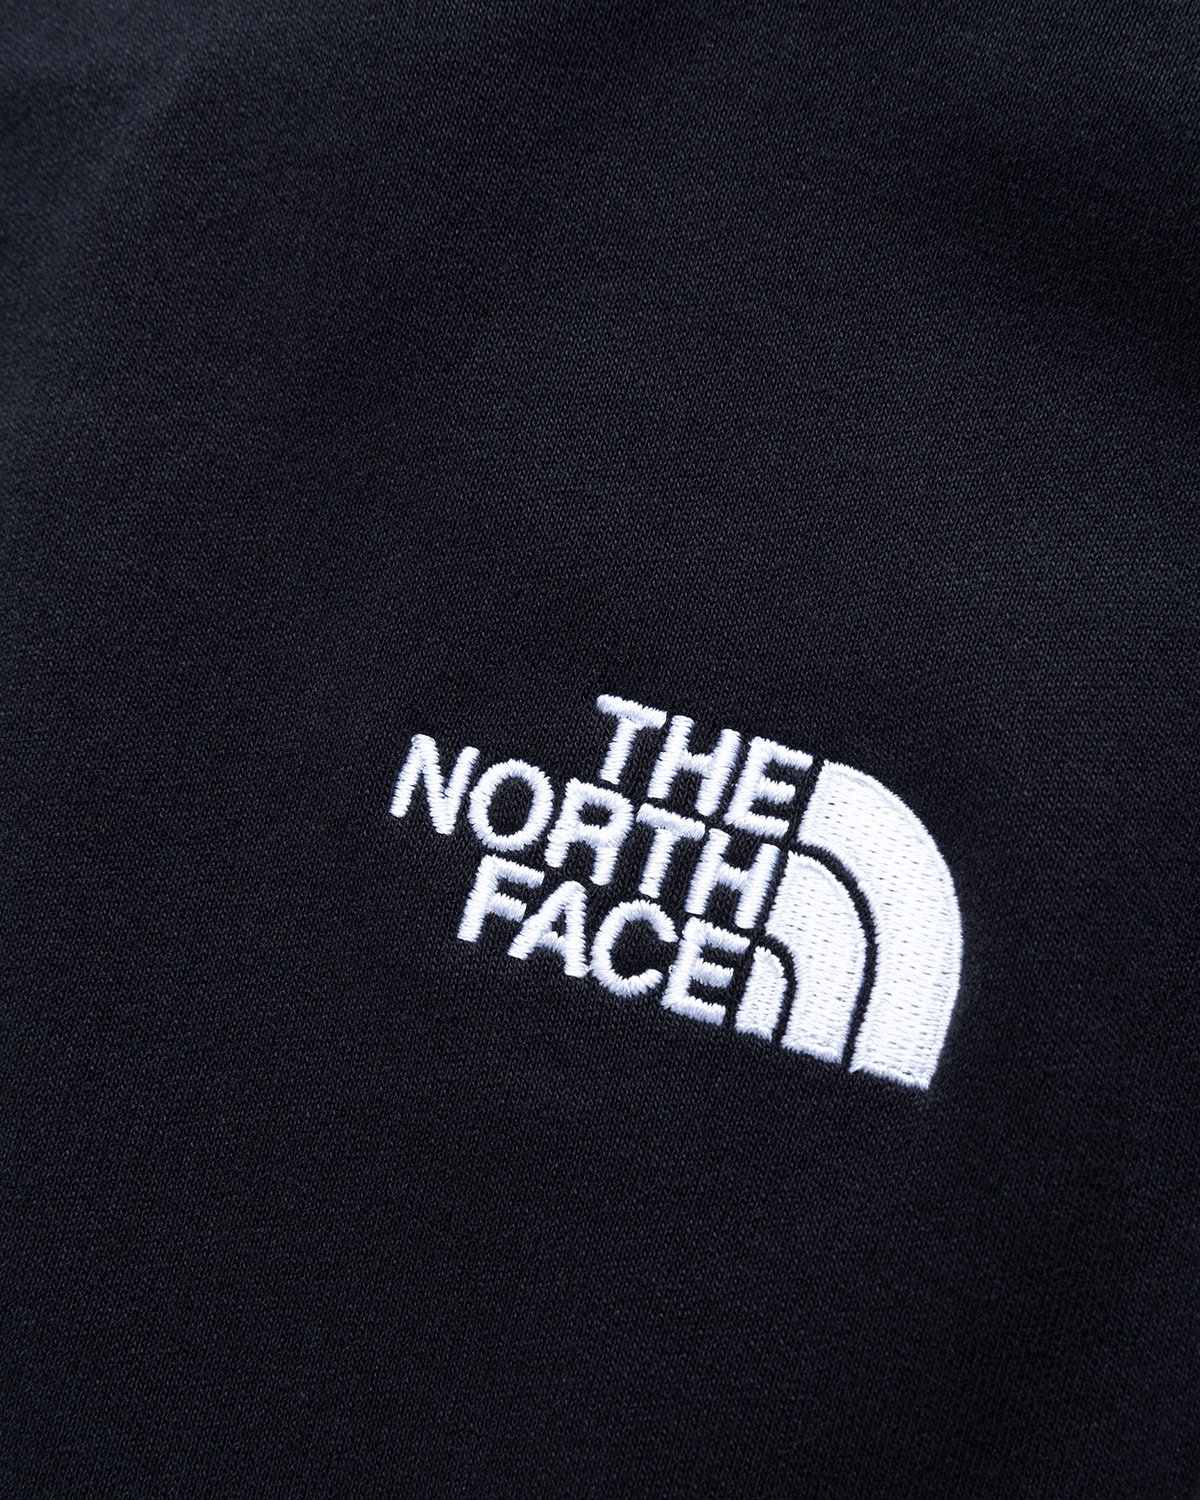 The North Face - Longsleeve Black - Clothing - Black - Image 4